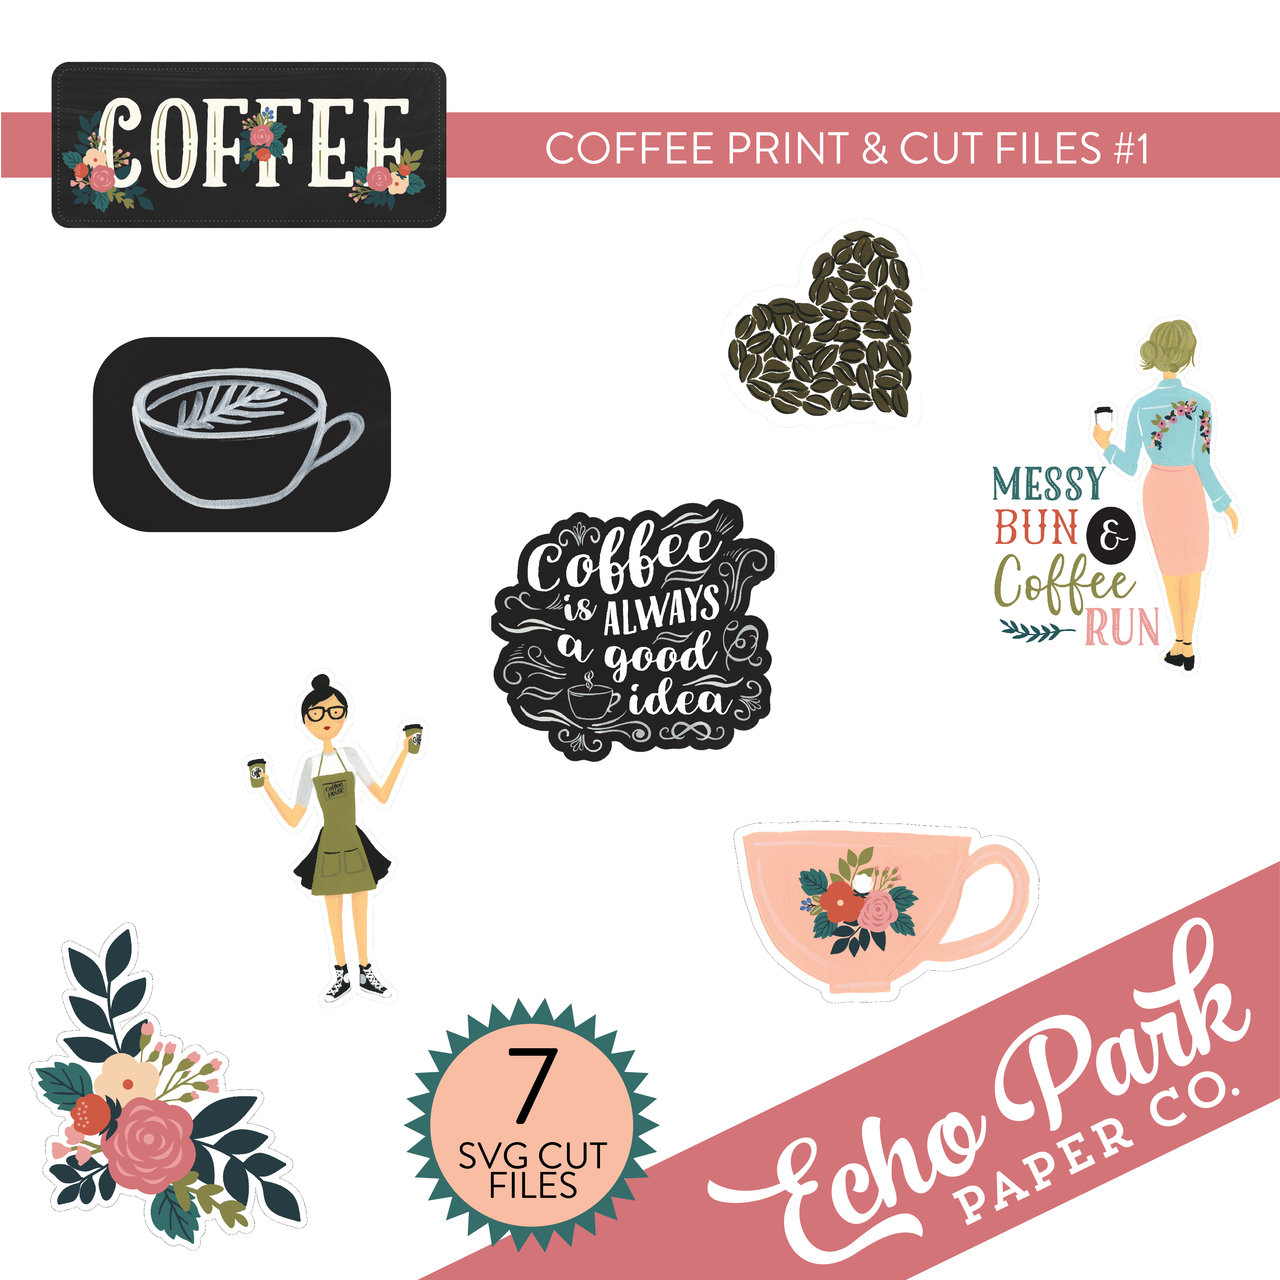 Coffee Print & Cut Files #1